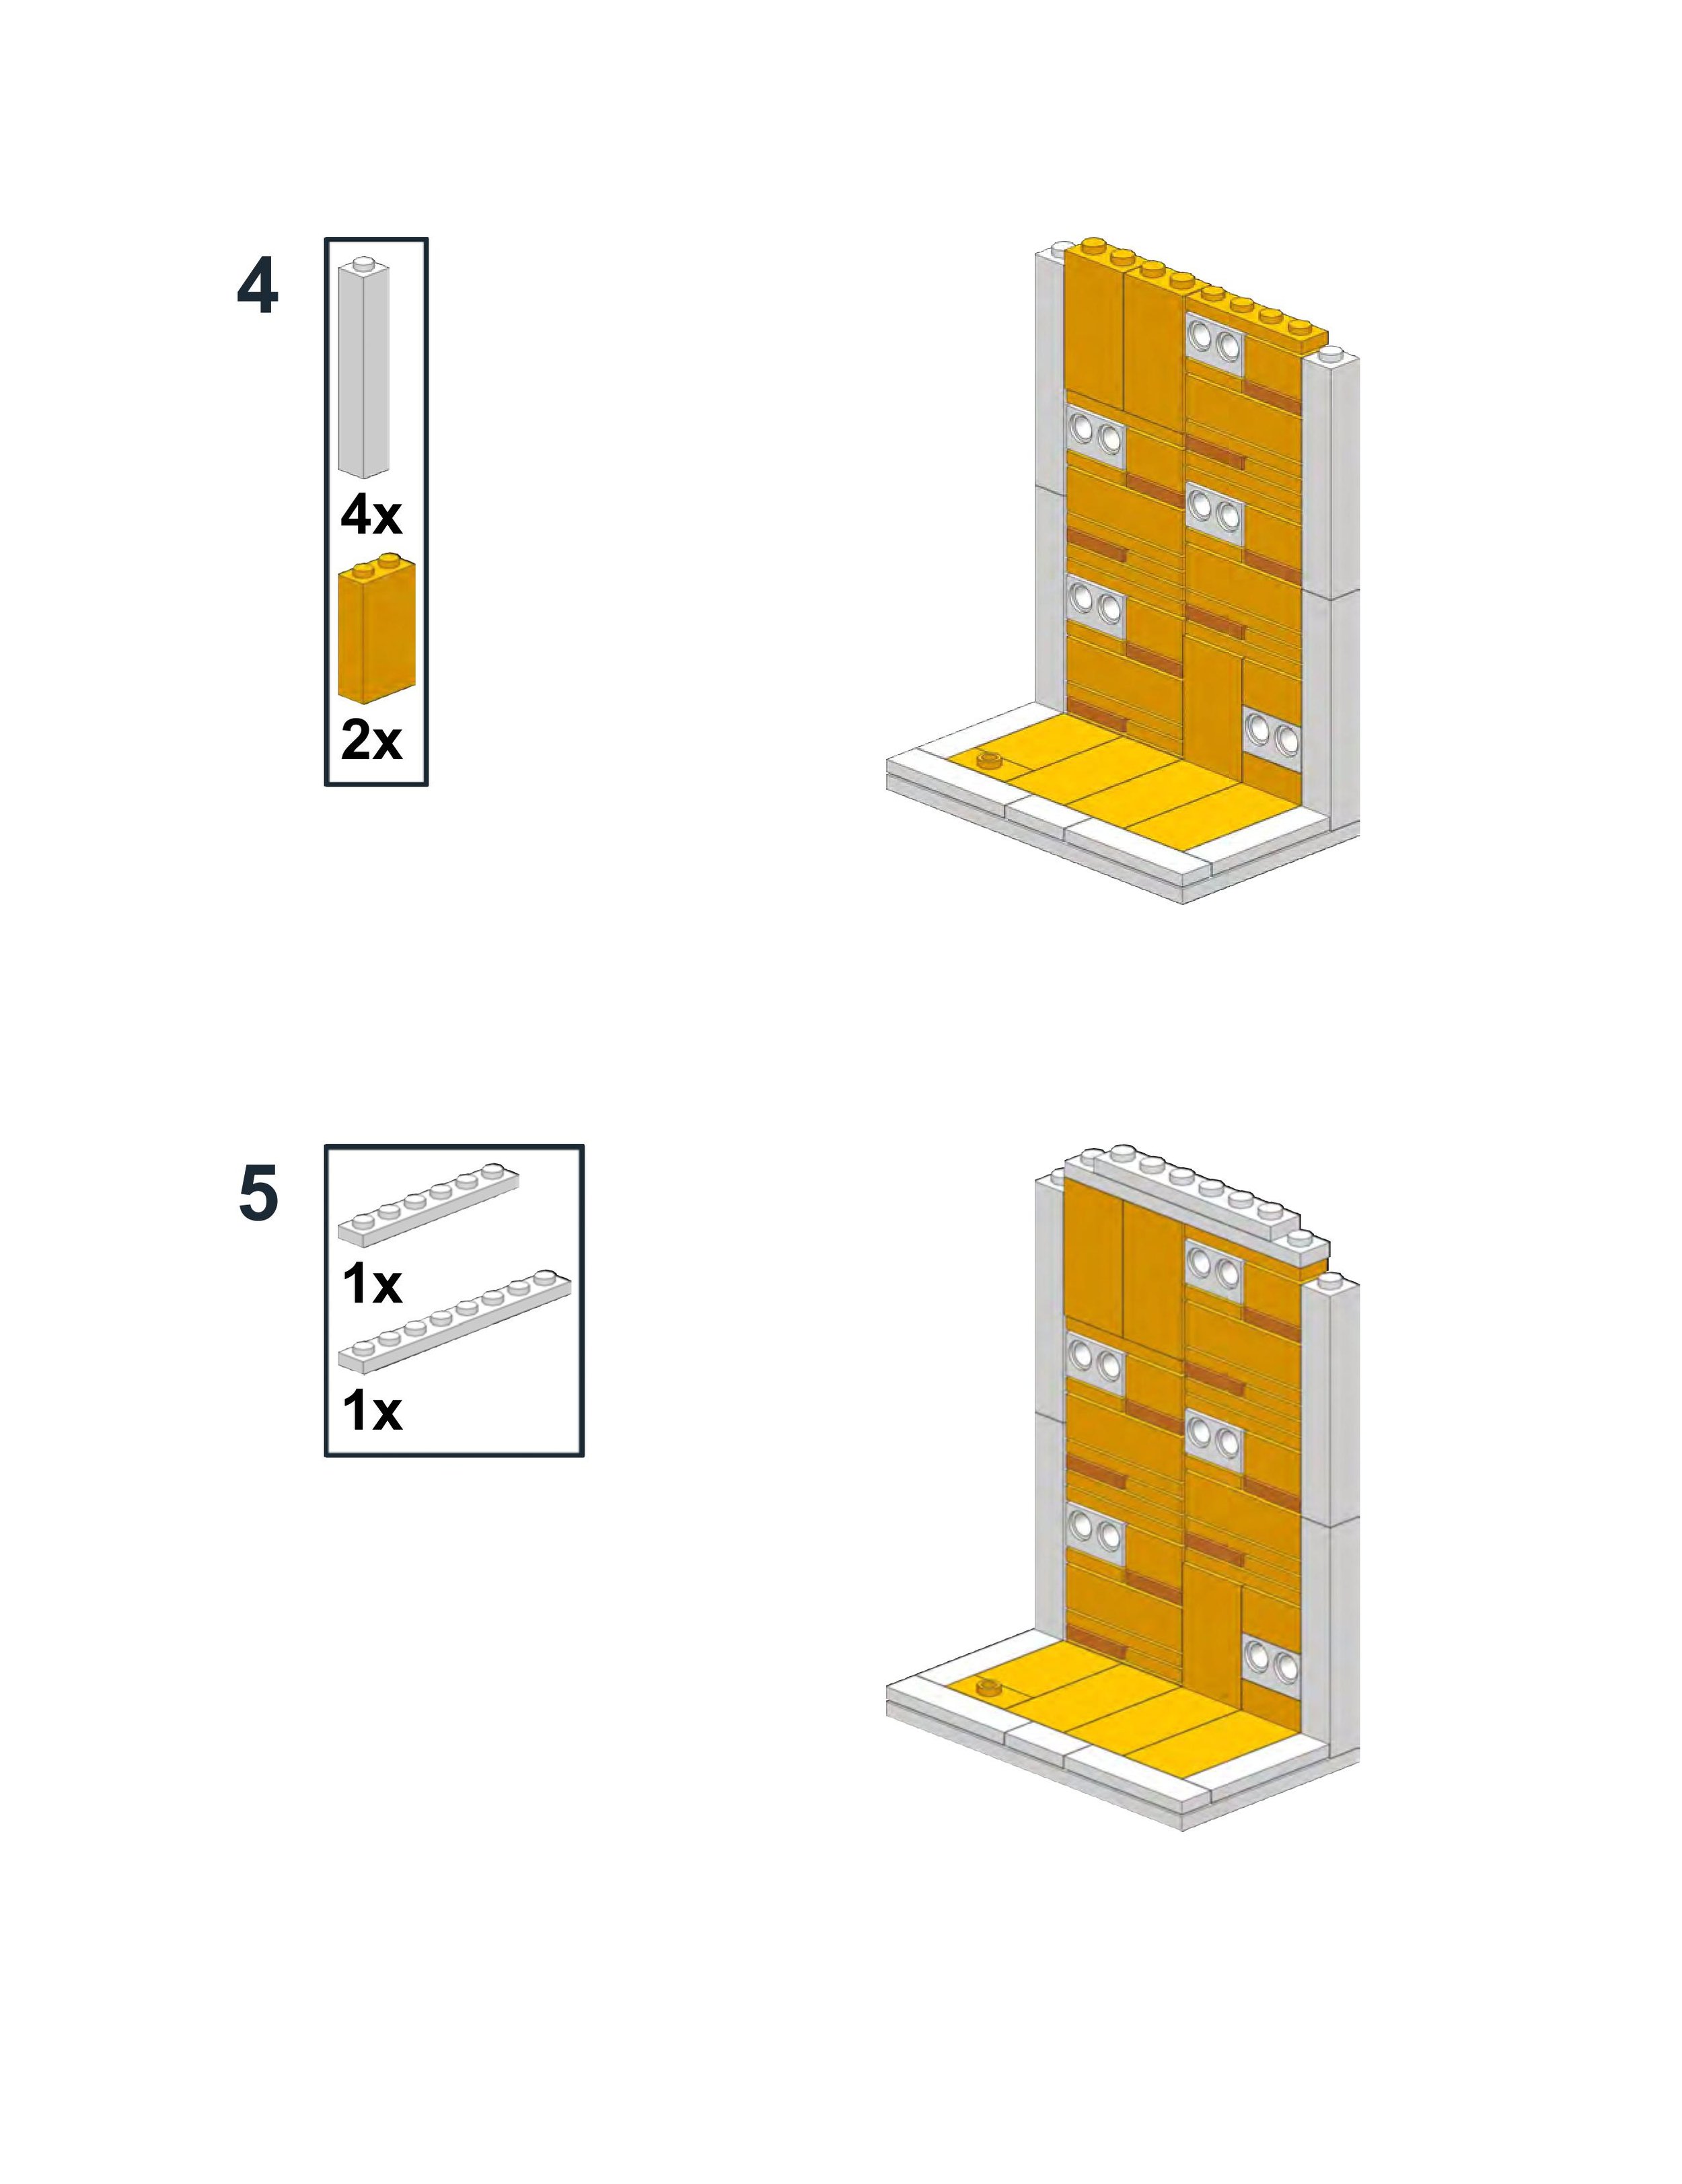 Flying by Bespin - Boba Fett and Cloud City Desk Vignette - LEGO Instructions - BrickNerd - 2.jpg